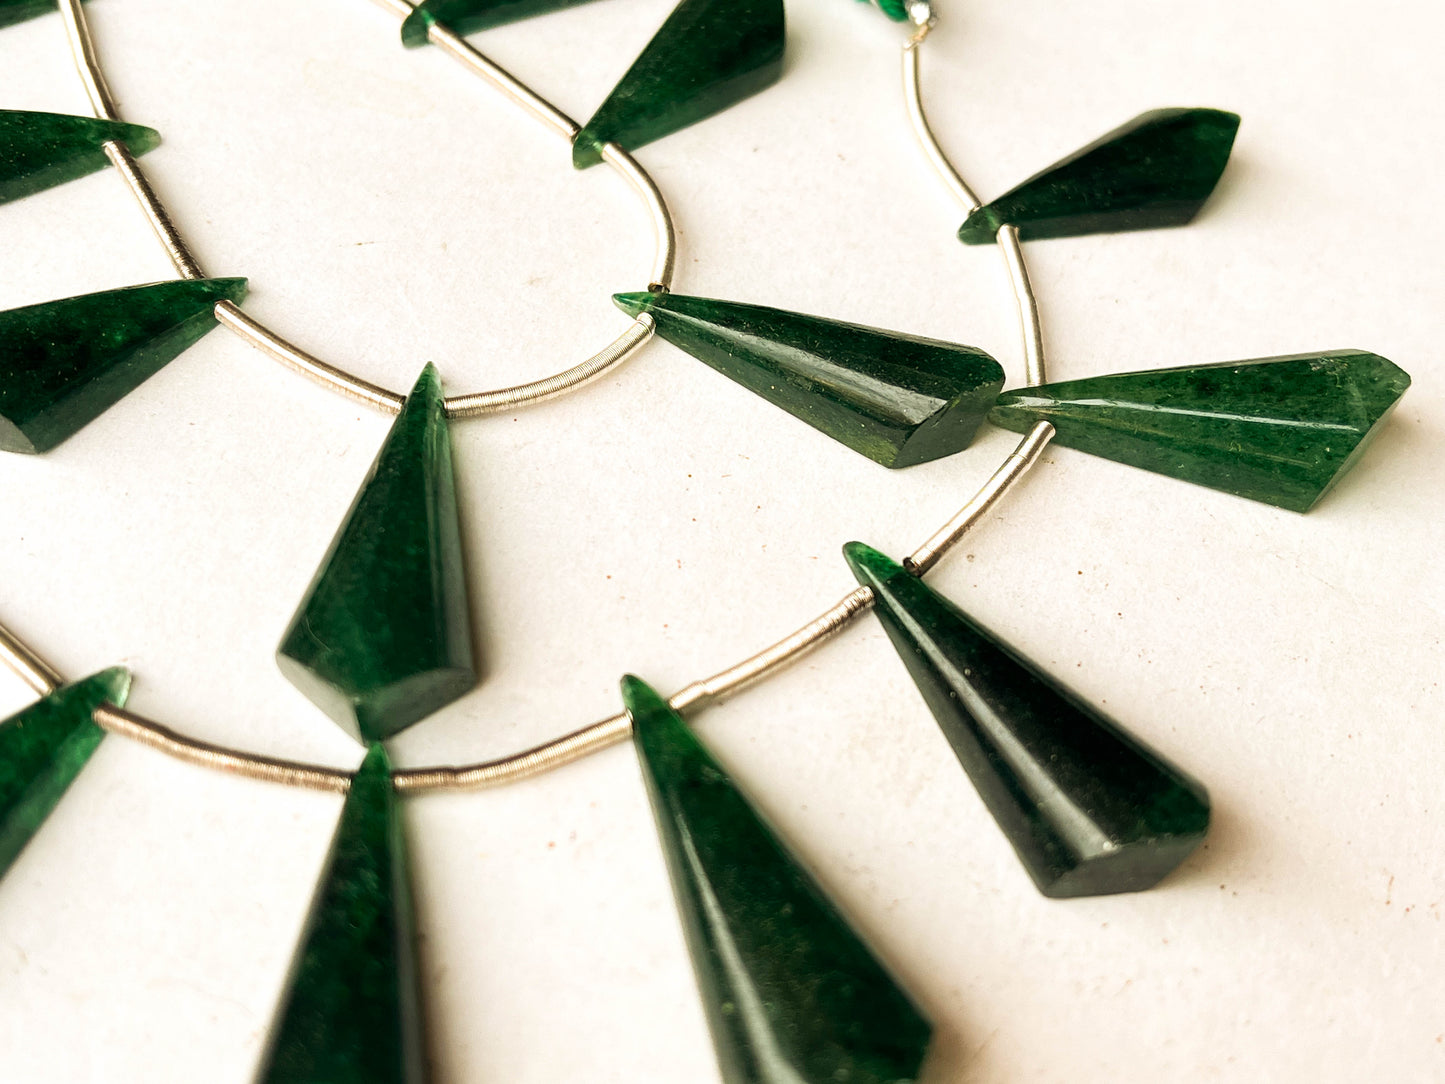 Dark Green Aventurine cone shape briolette beads Beadsforyourjewelry